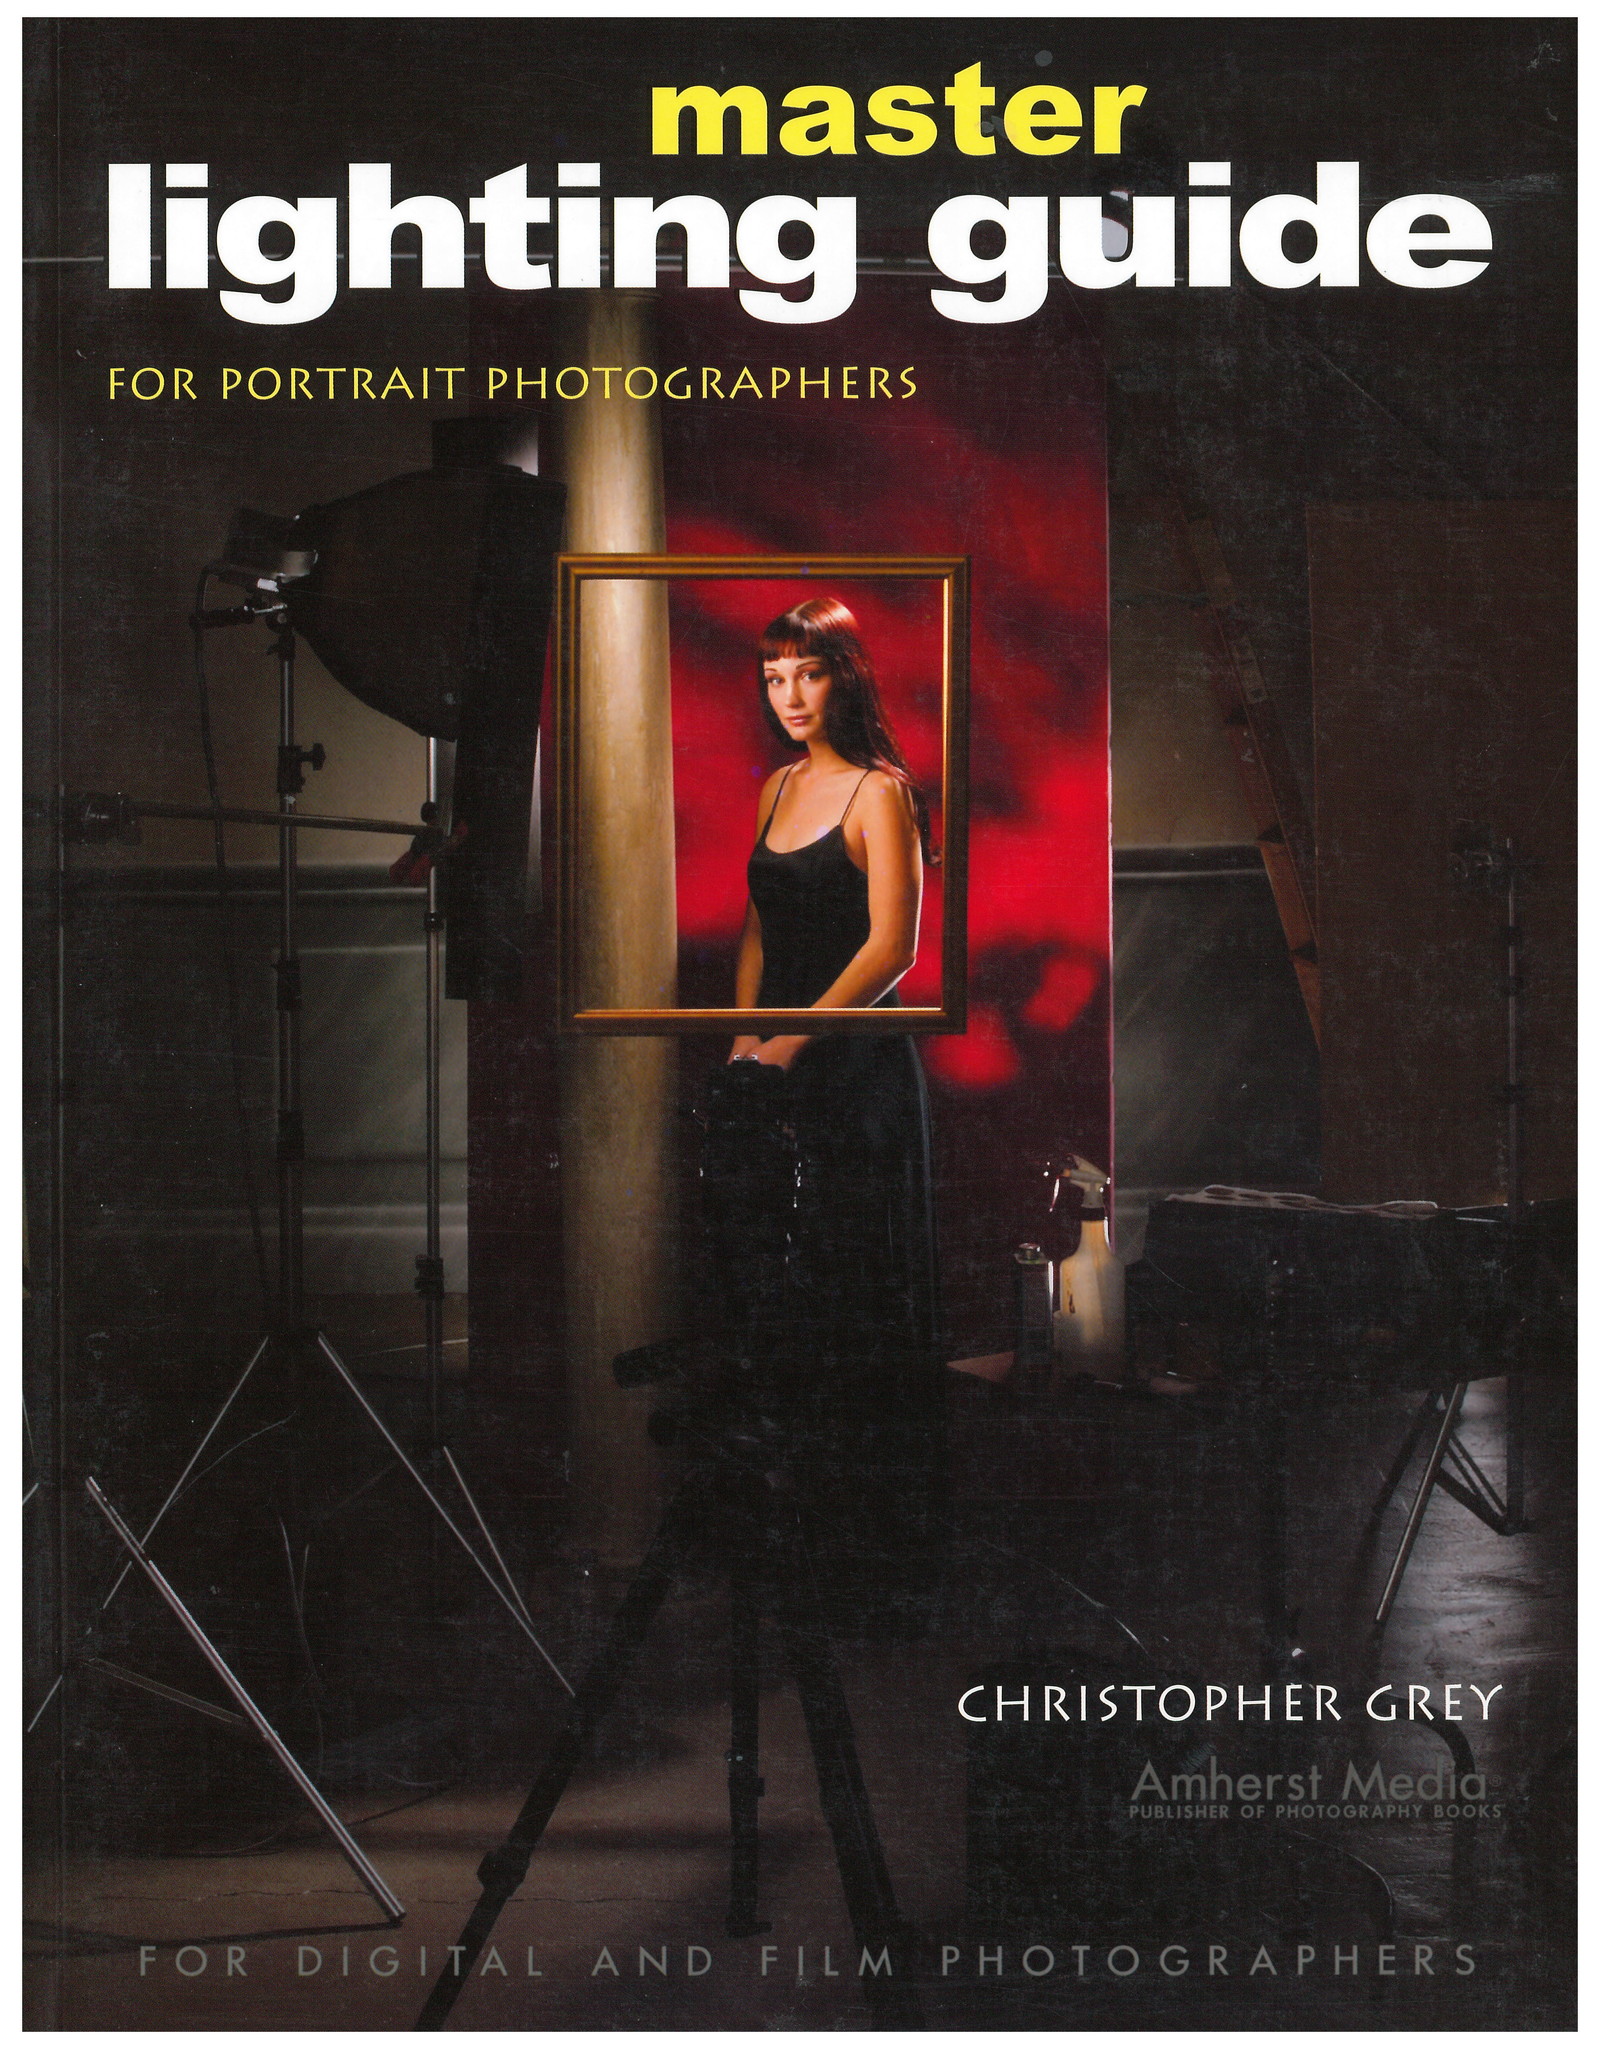 Master Lighting Guide / Christopher Grey